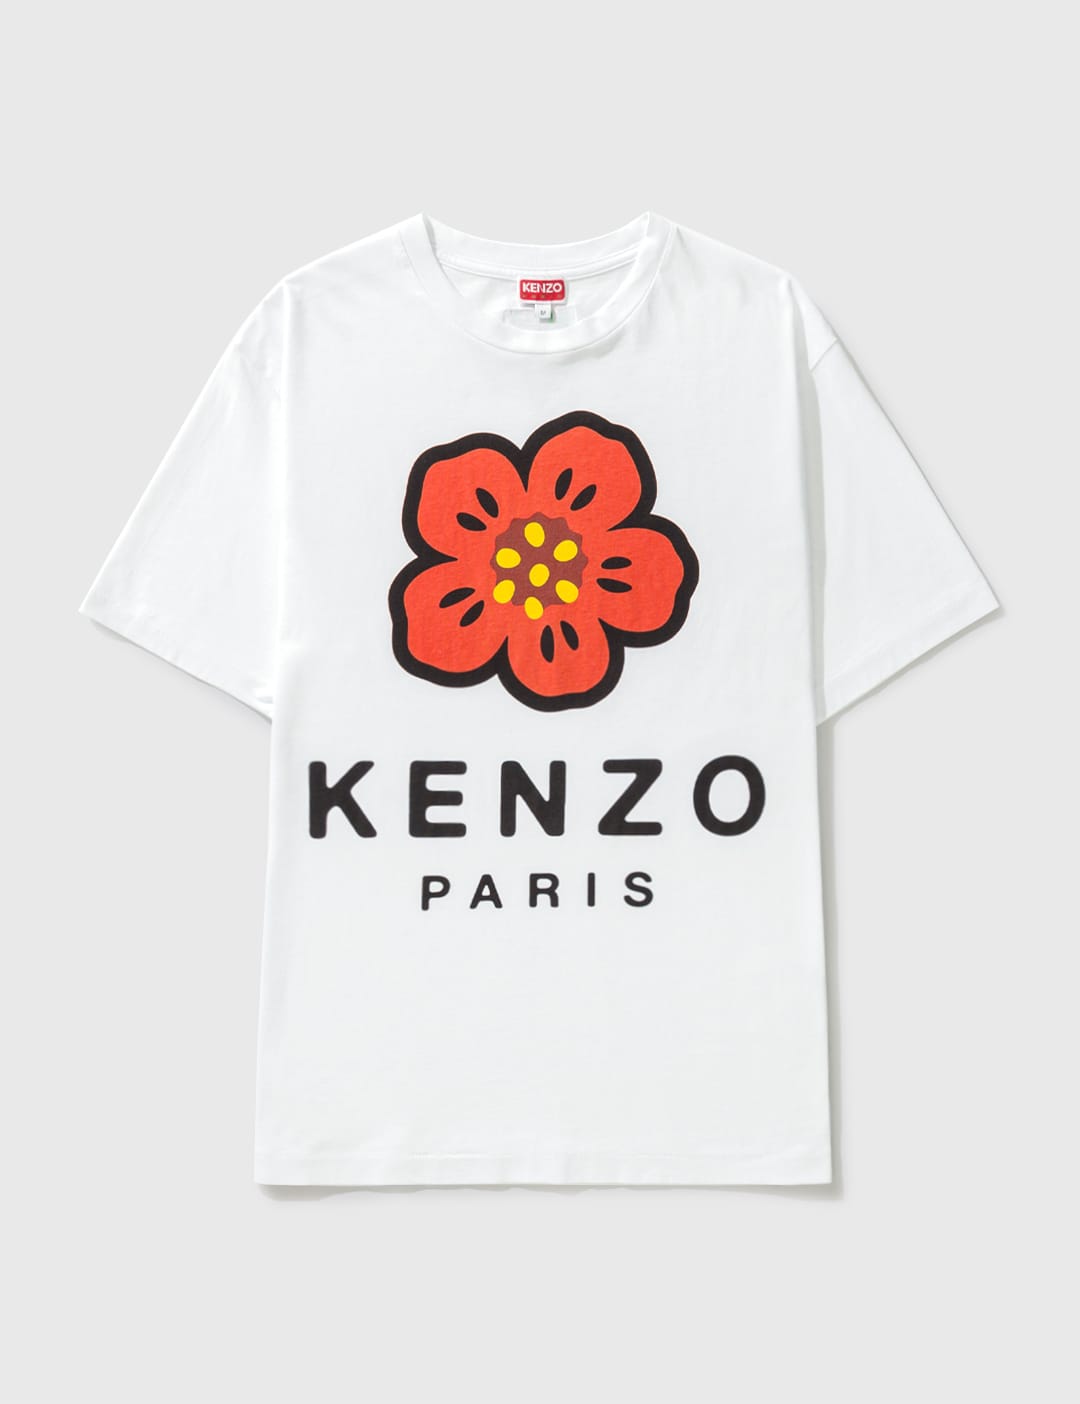 Kenzo Paris - BOKE FLOWER T-shirt | HBX - Globally Curated Fashion 